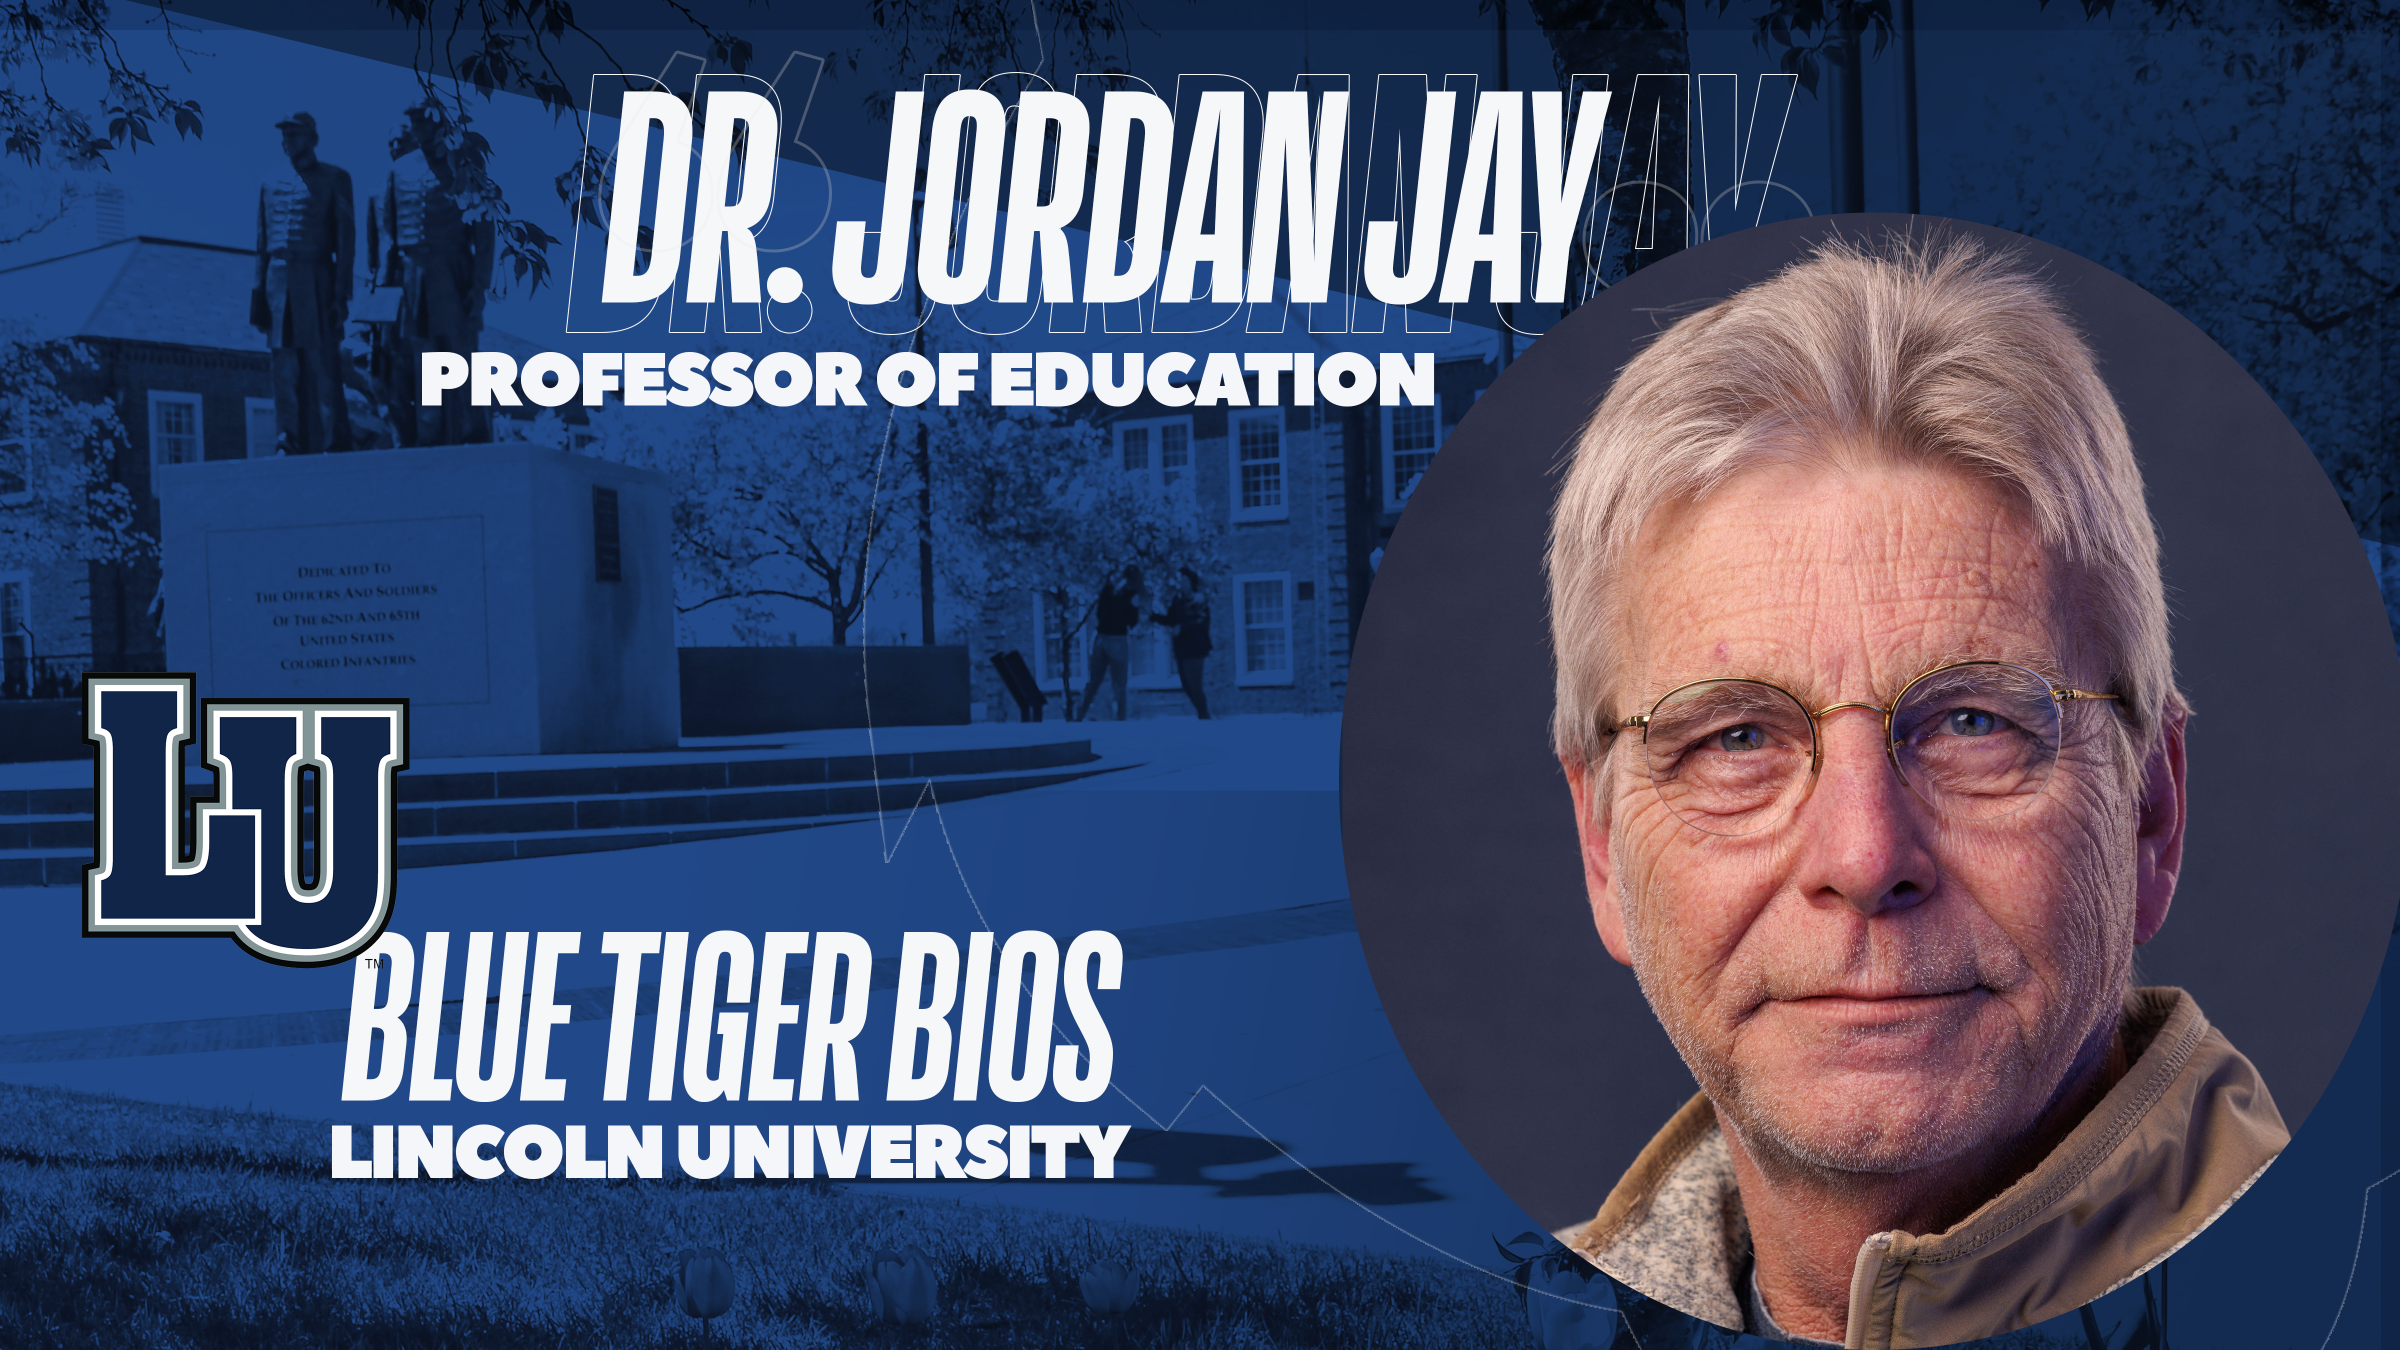 Professor of Education Dr. Jordan Jay